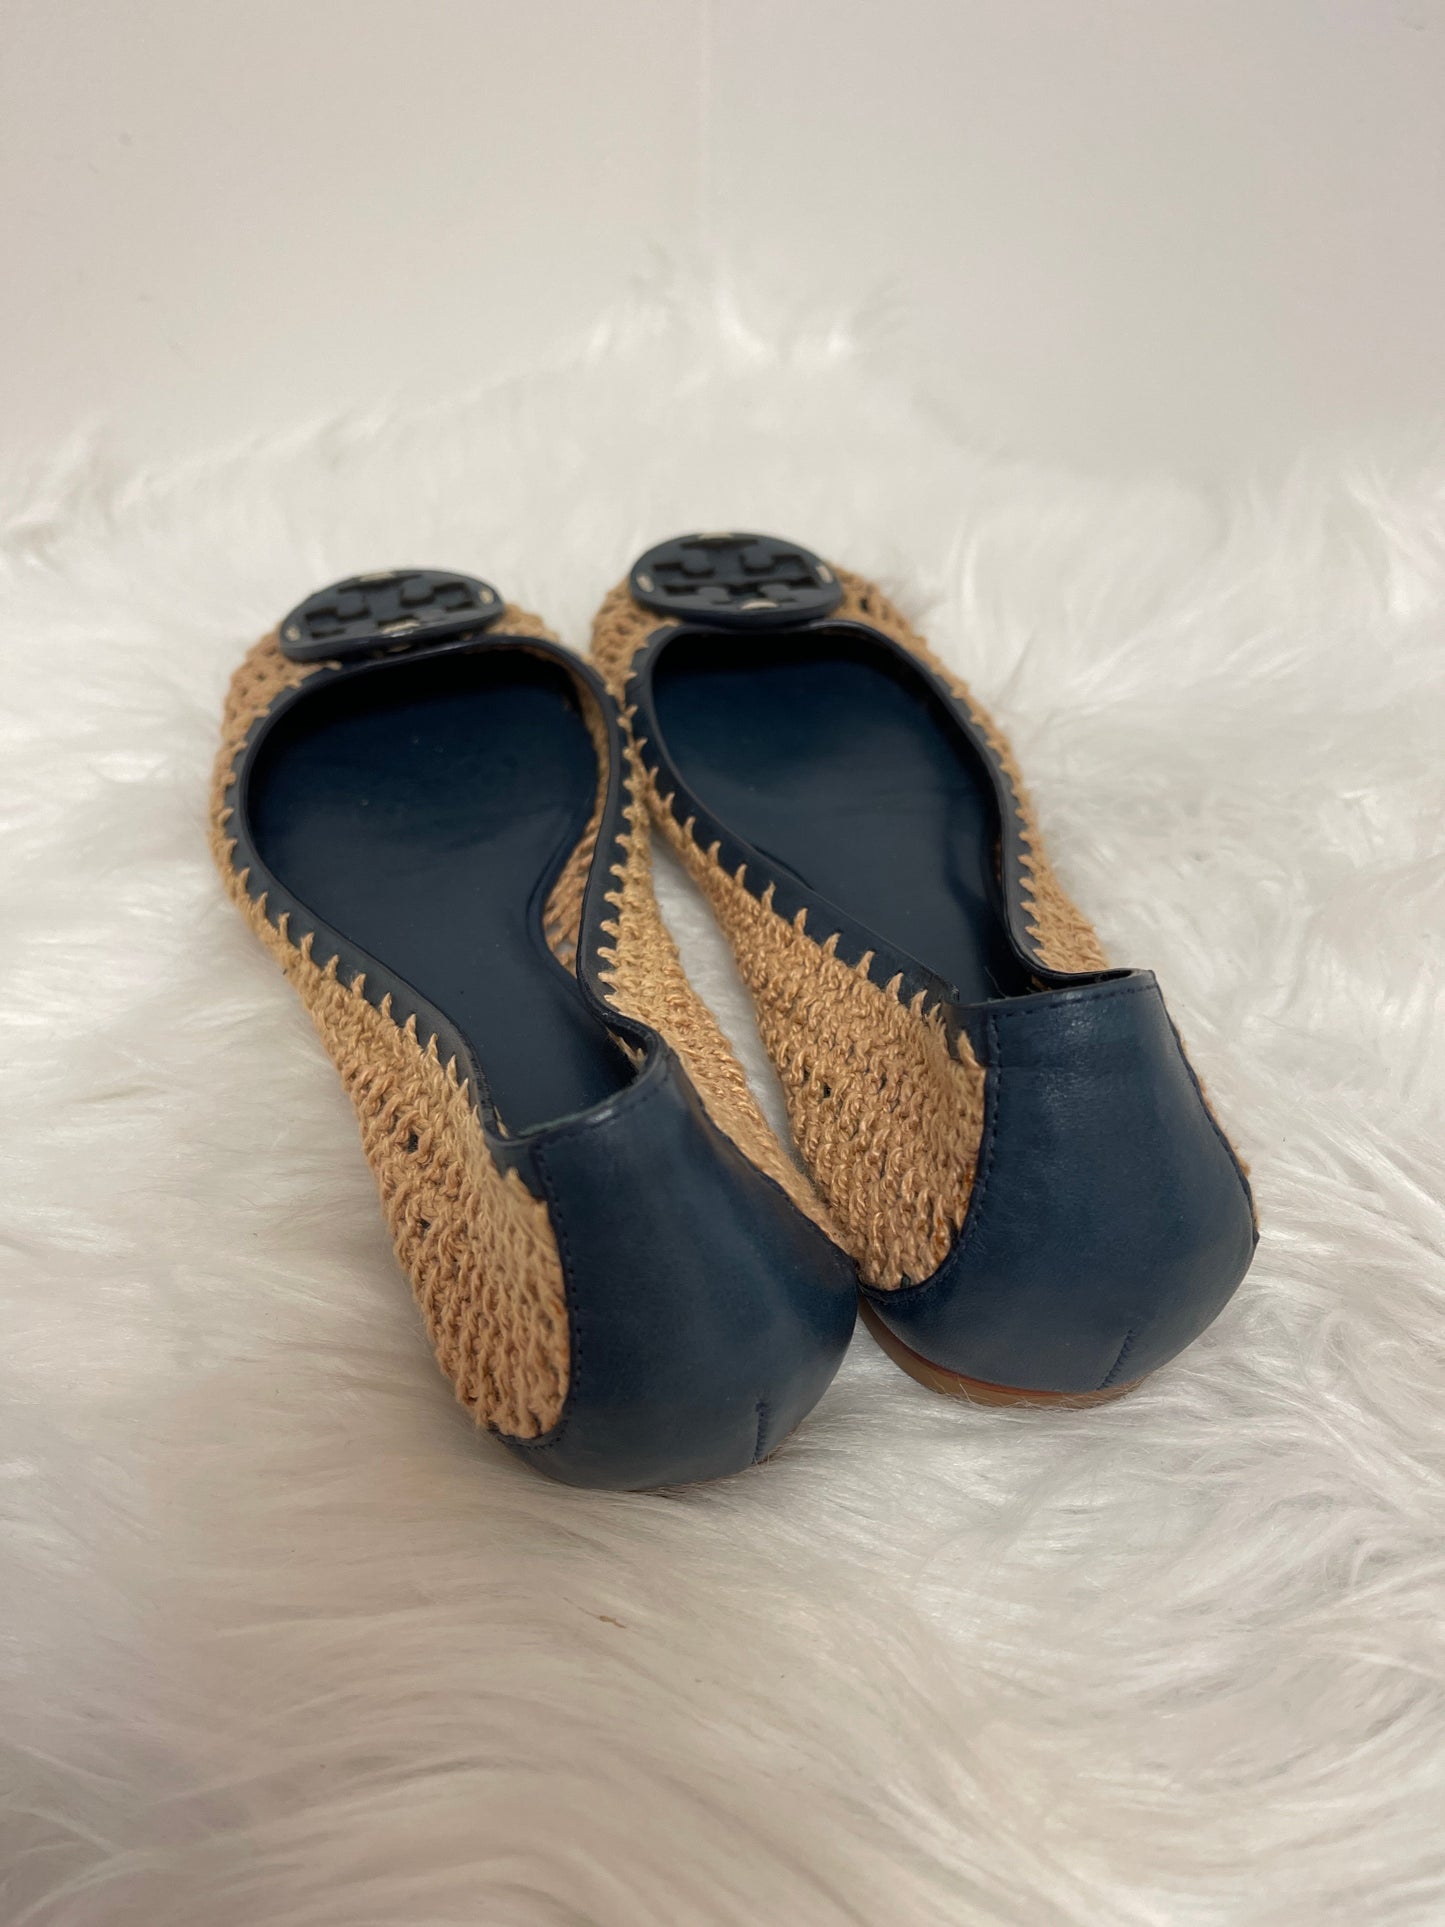 Blue & Cream Shoes Designer Tory Burch, Size 7